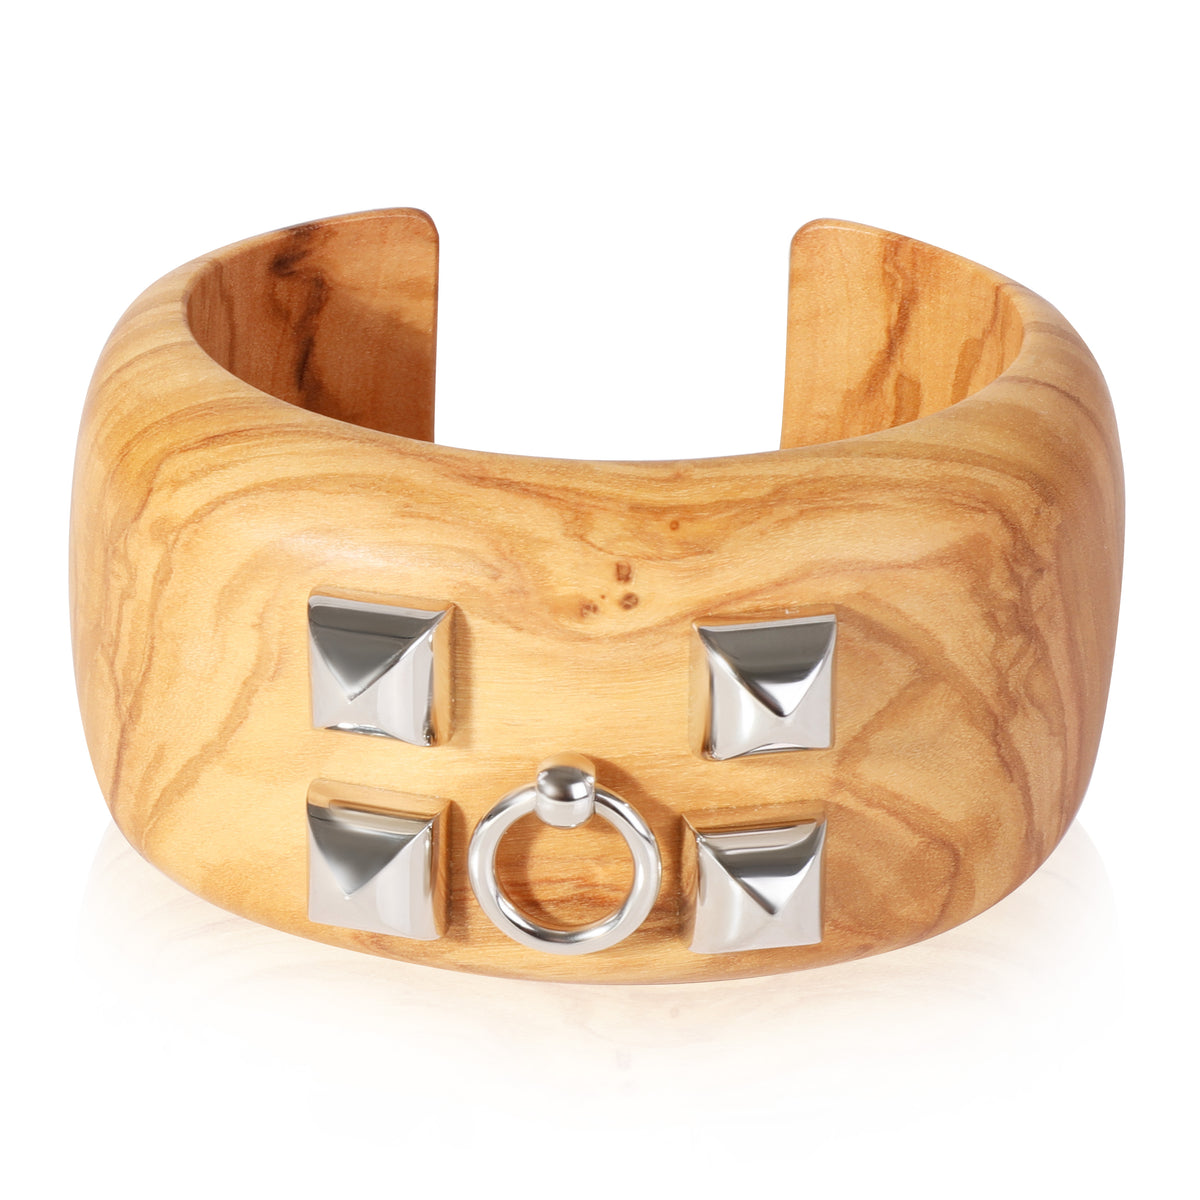 Hermes Medor Wood Cuff Bracelet, Size Small